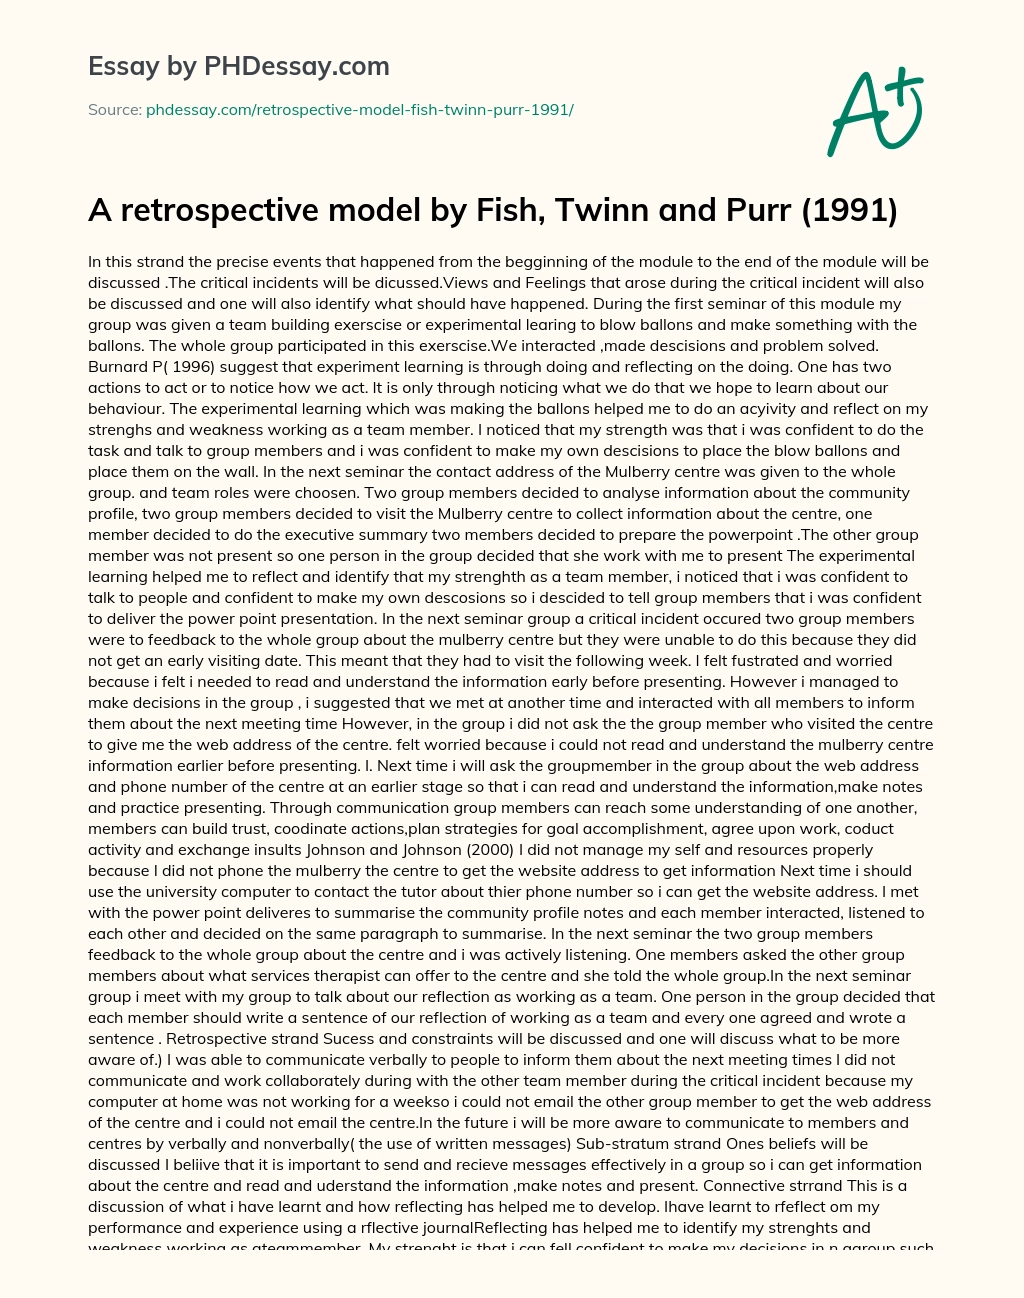 A retrospective model by Fish, Twinn and Purr (1991) essay